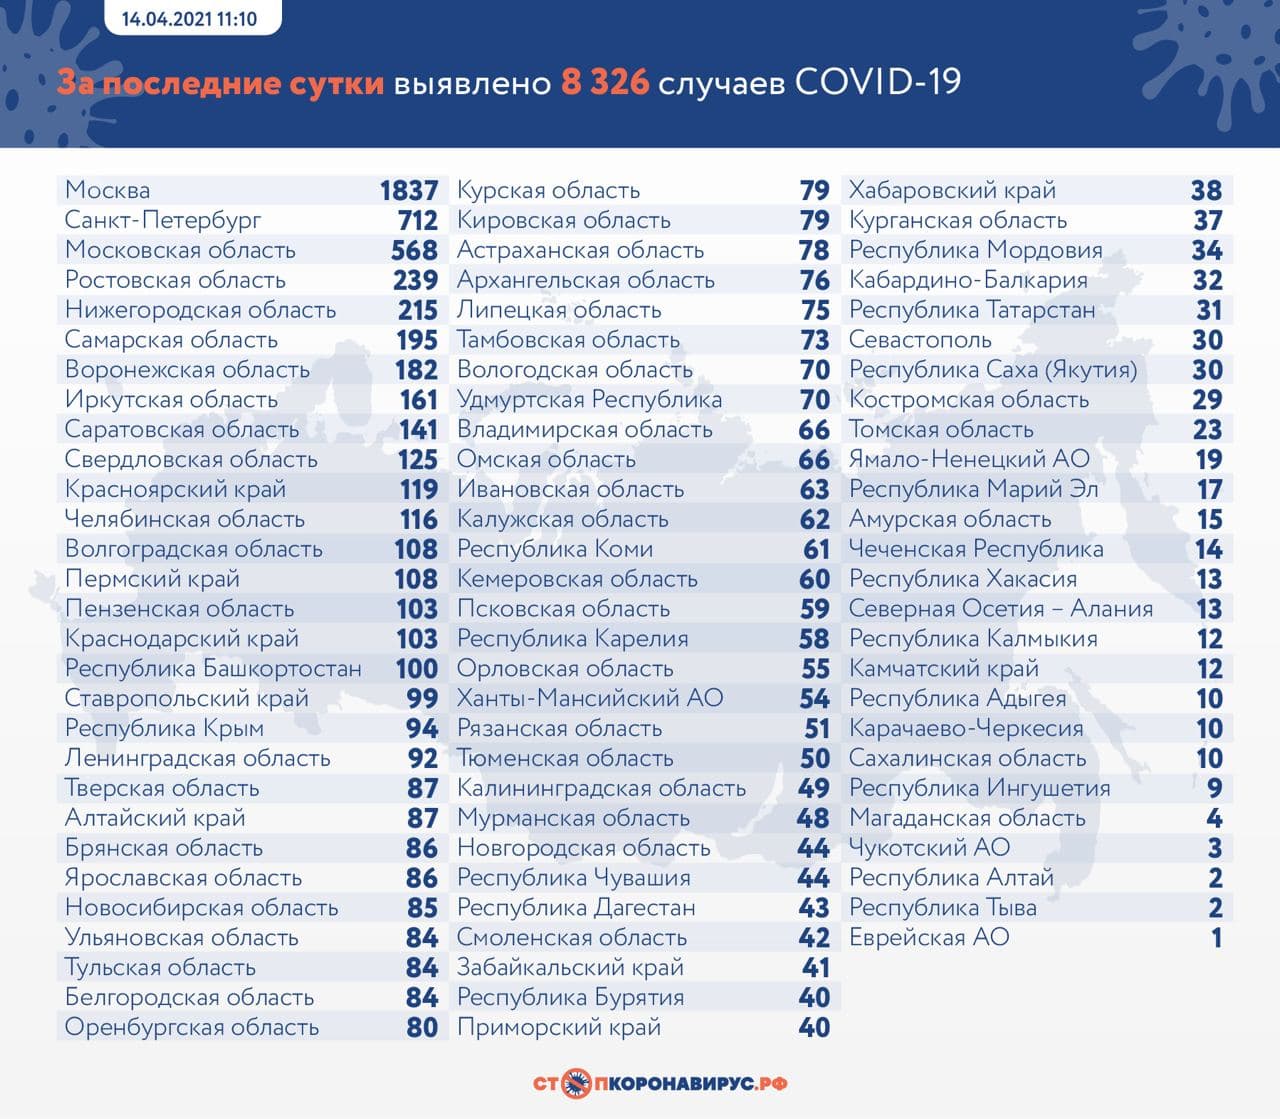 Оперативная статистика по коронавирусу в России на 14 апреля